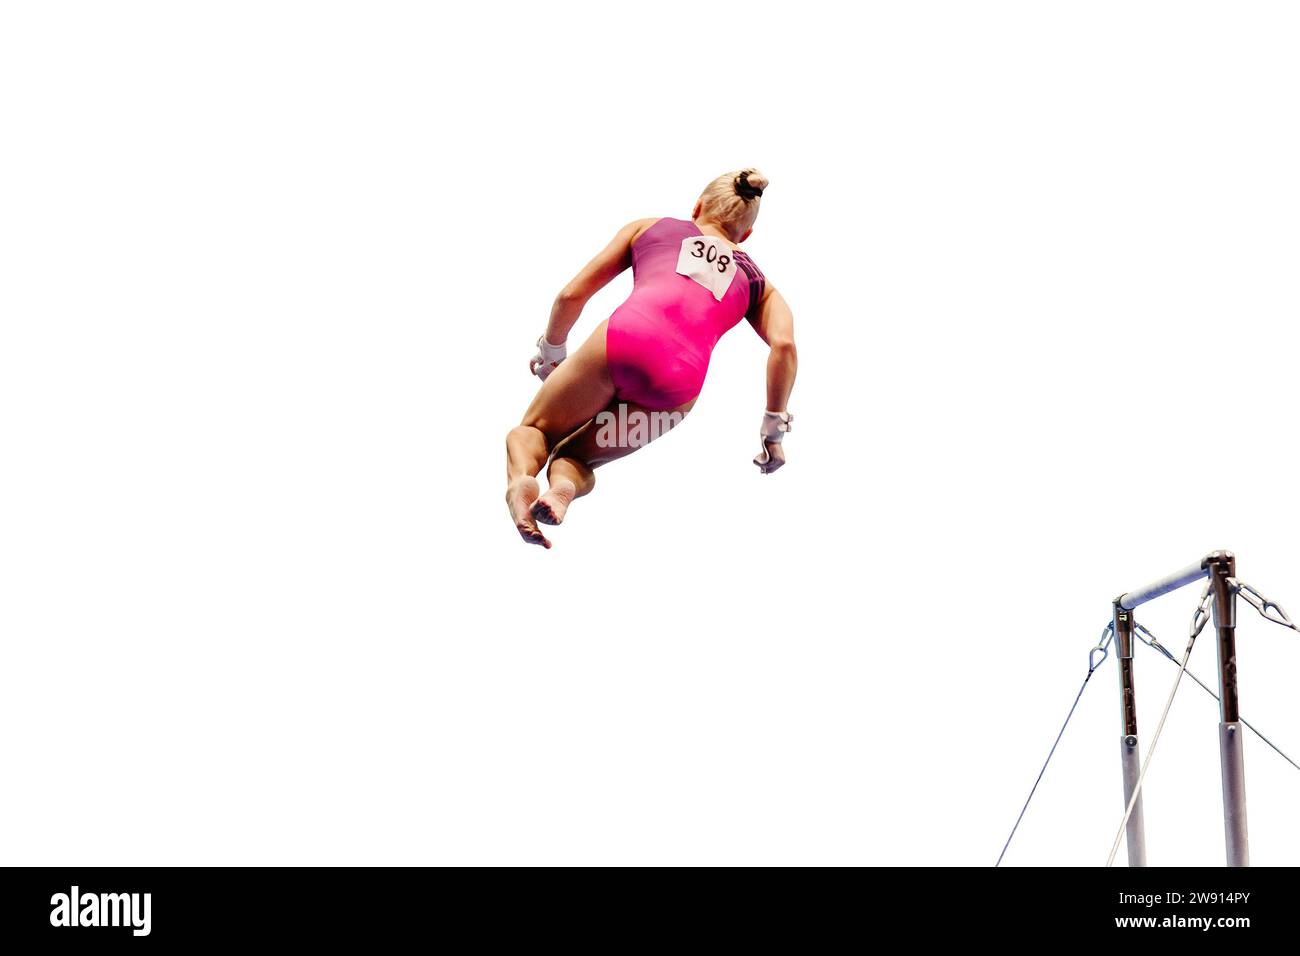 ginnasta femminile che esegue la ginnastica somersault su bar irregolari, isolata su sfondo bianco Foto Stock